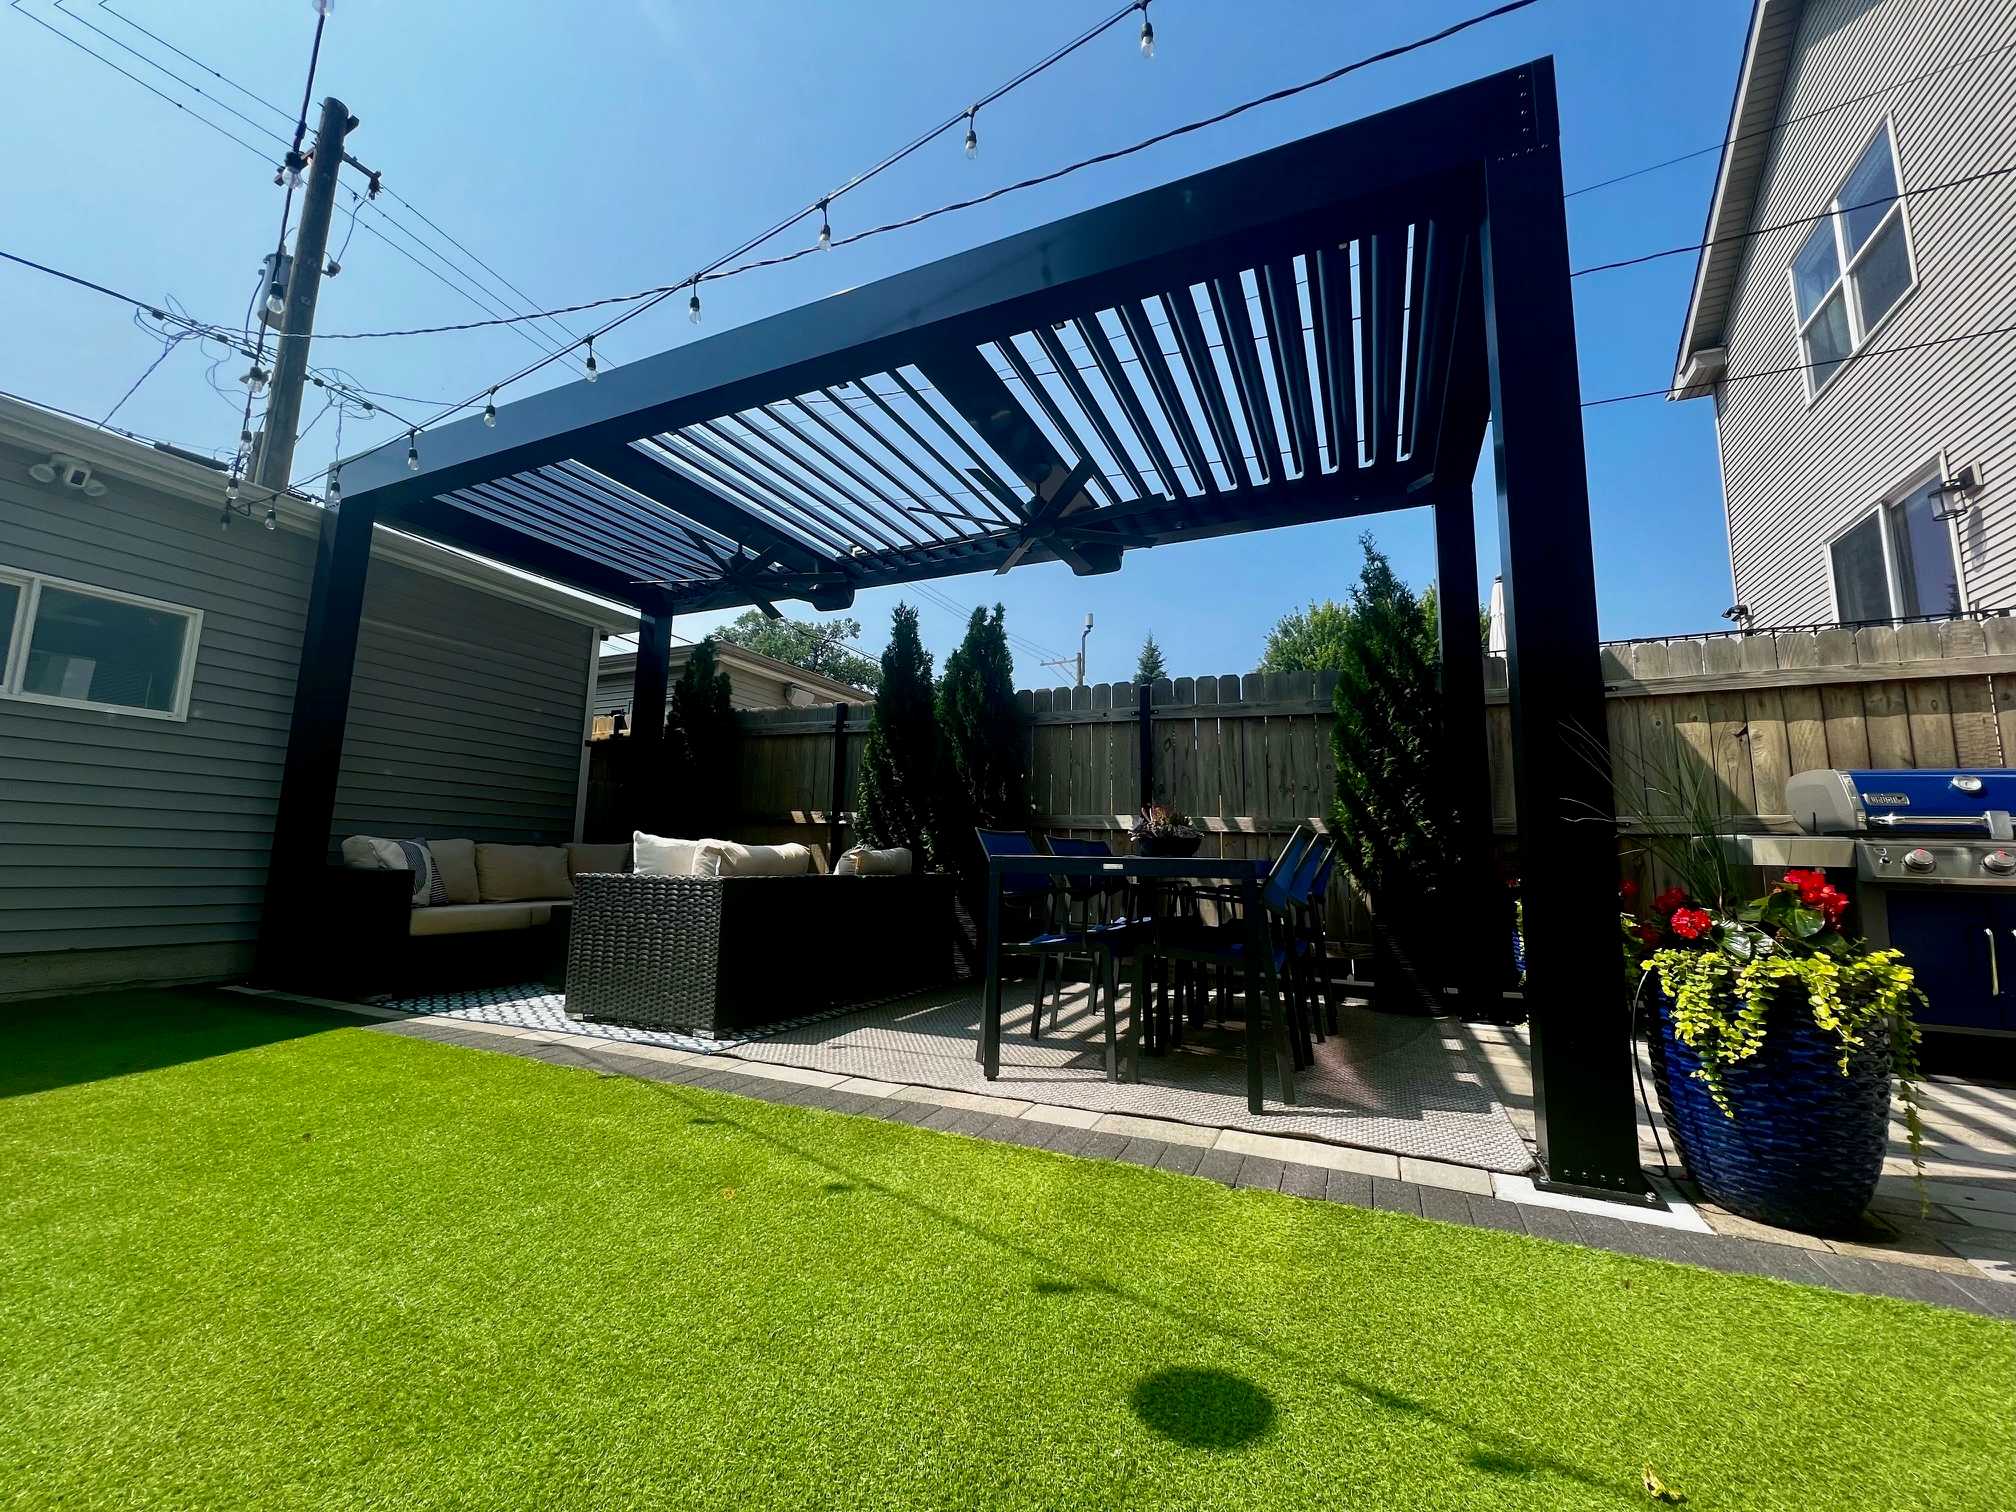 patio cover pergola helps create more comfortable space